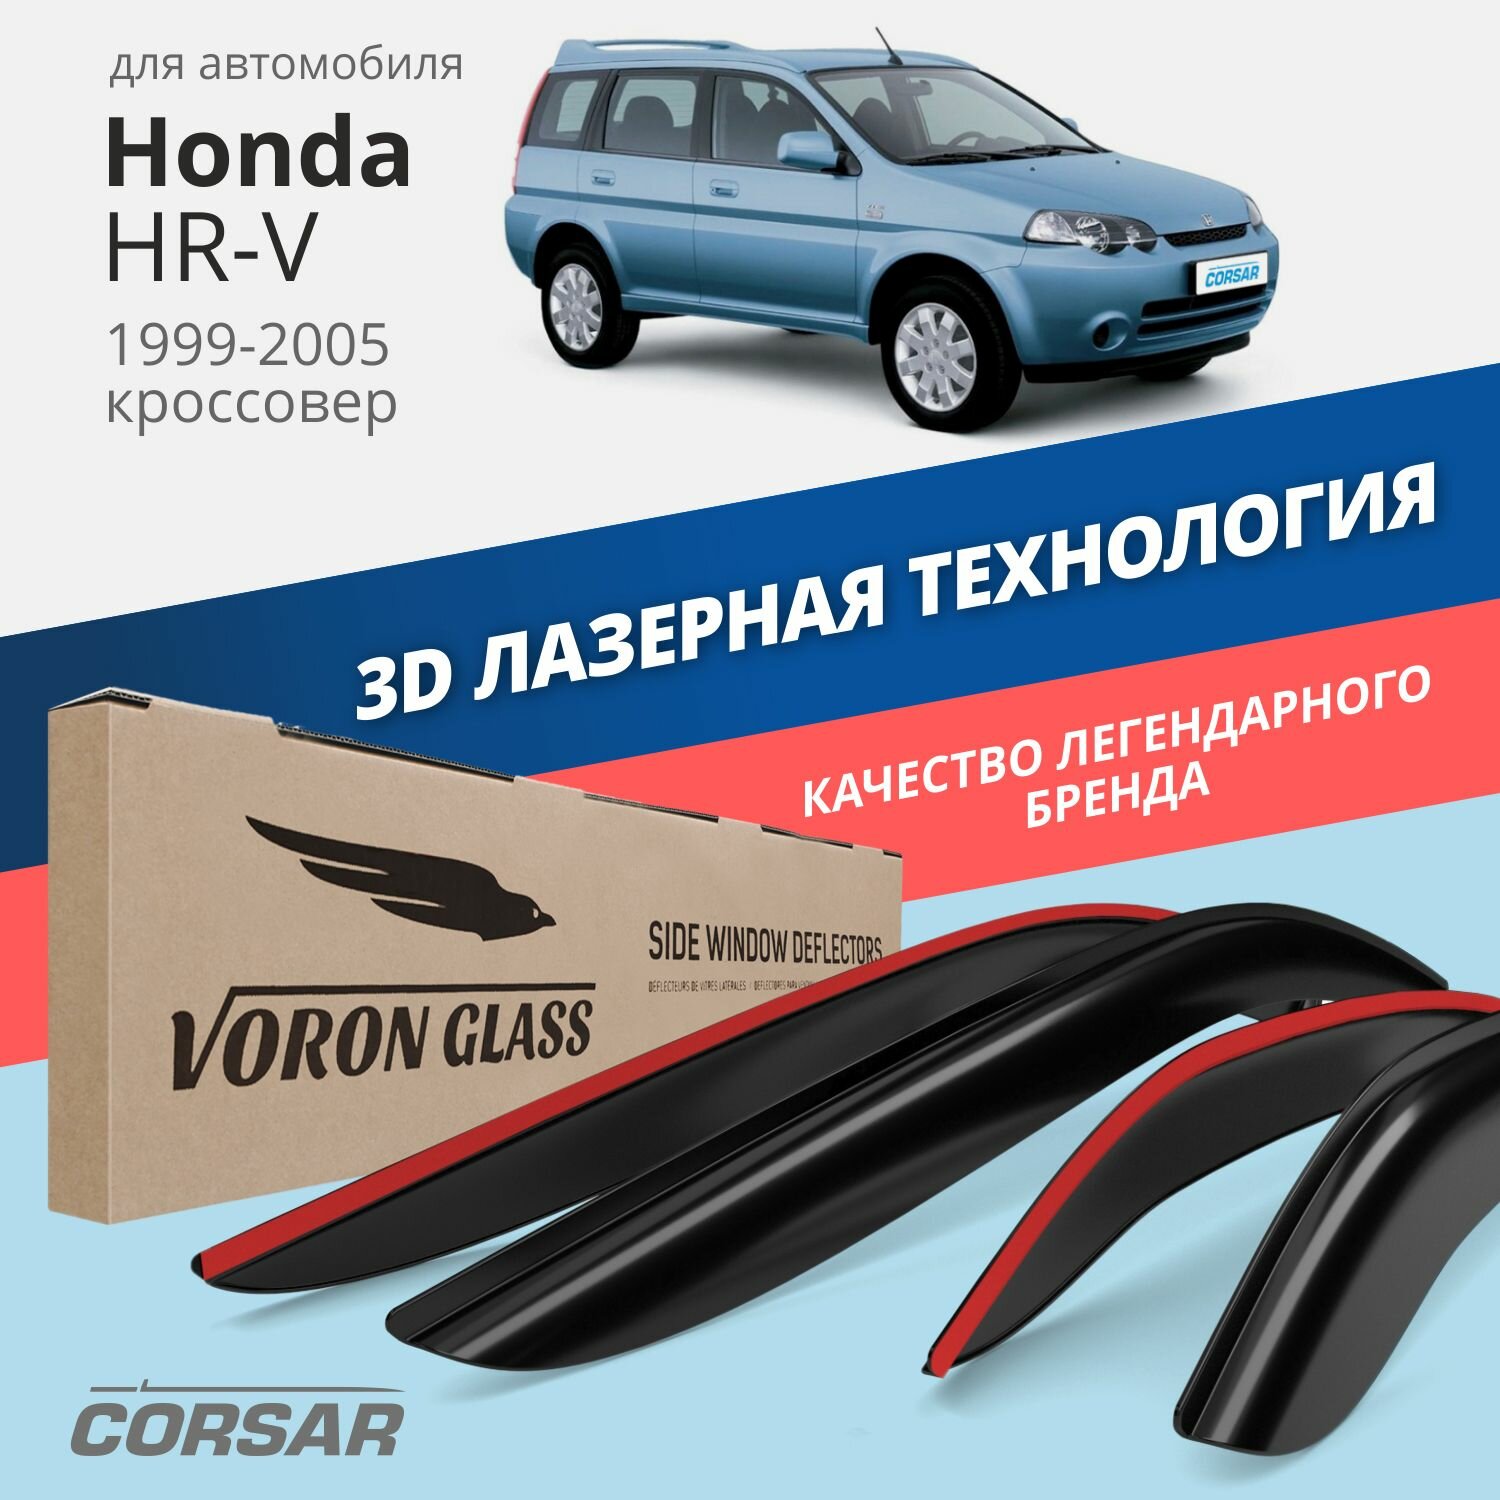 Дефлекторы на окна Voron Glass CORSAR Honda HR-V 1999-2005, комплект 4шт, - фото №1